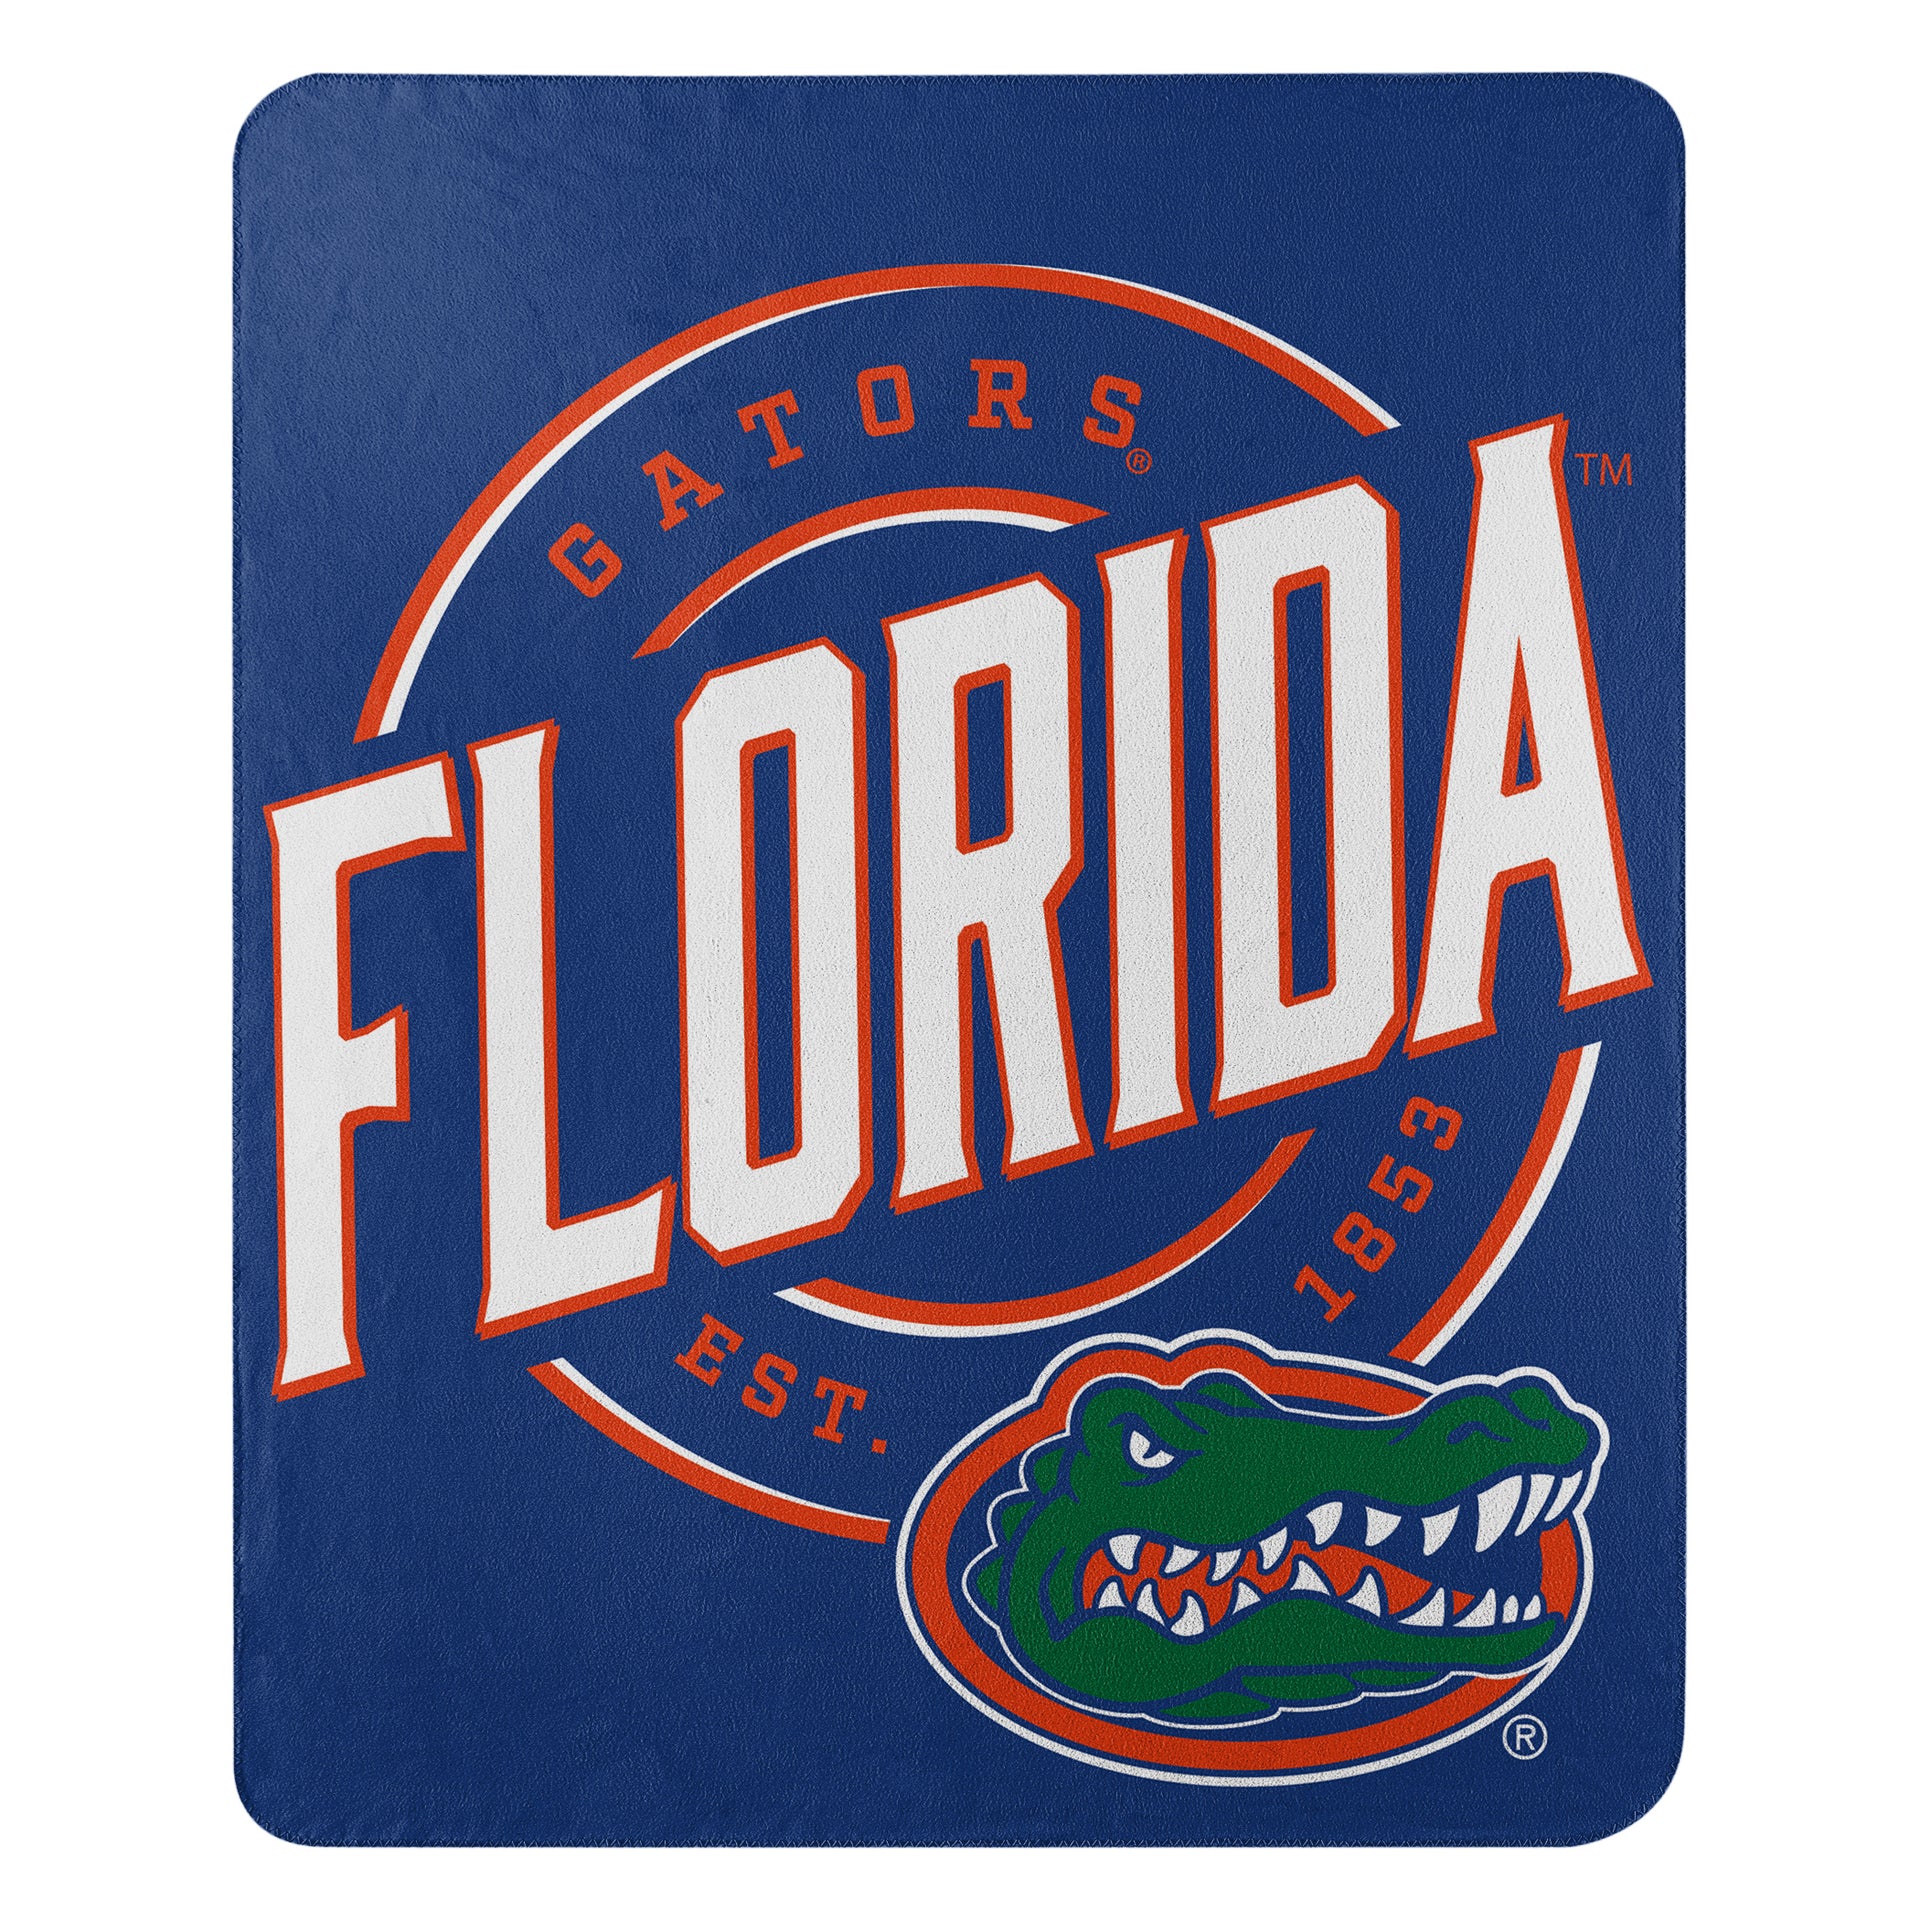 Florida Gators 50" x 60" Campaign Fleece Blanket - Dynasty Sports & Framing 